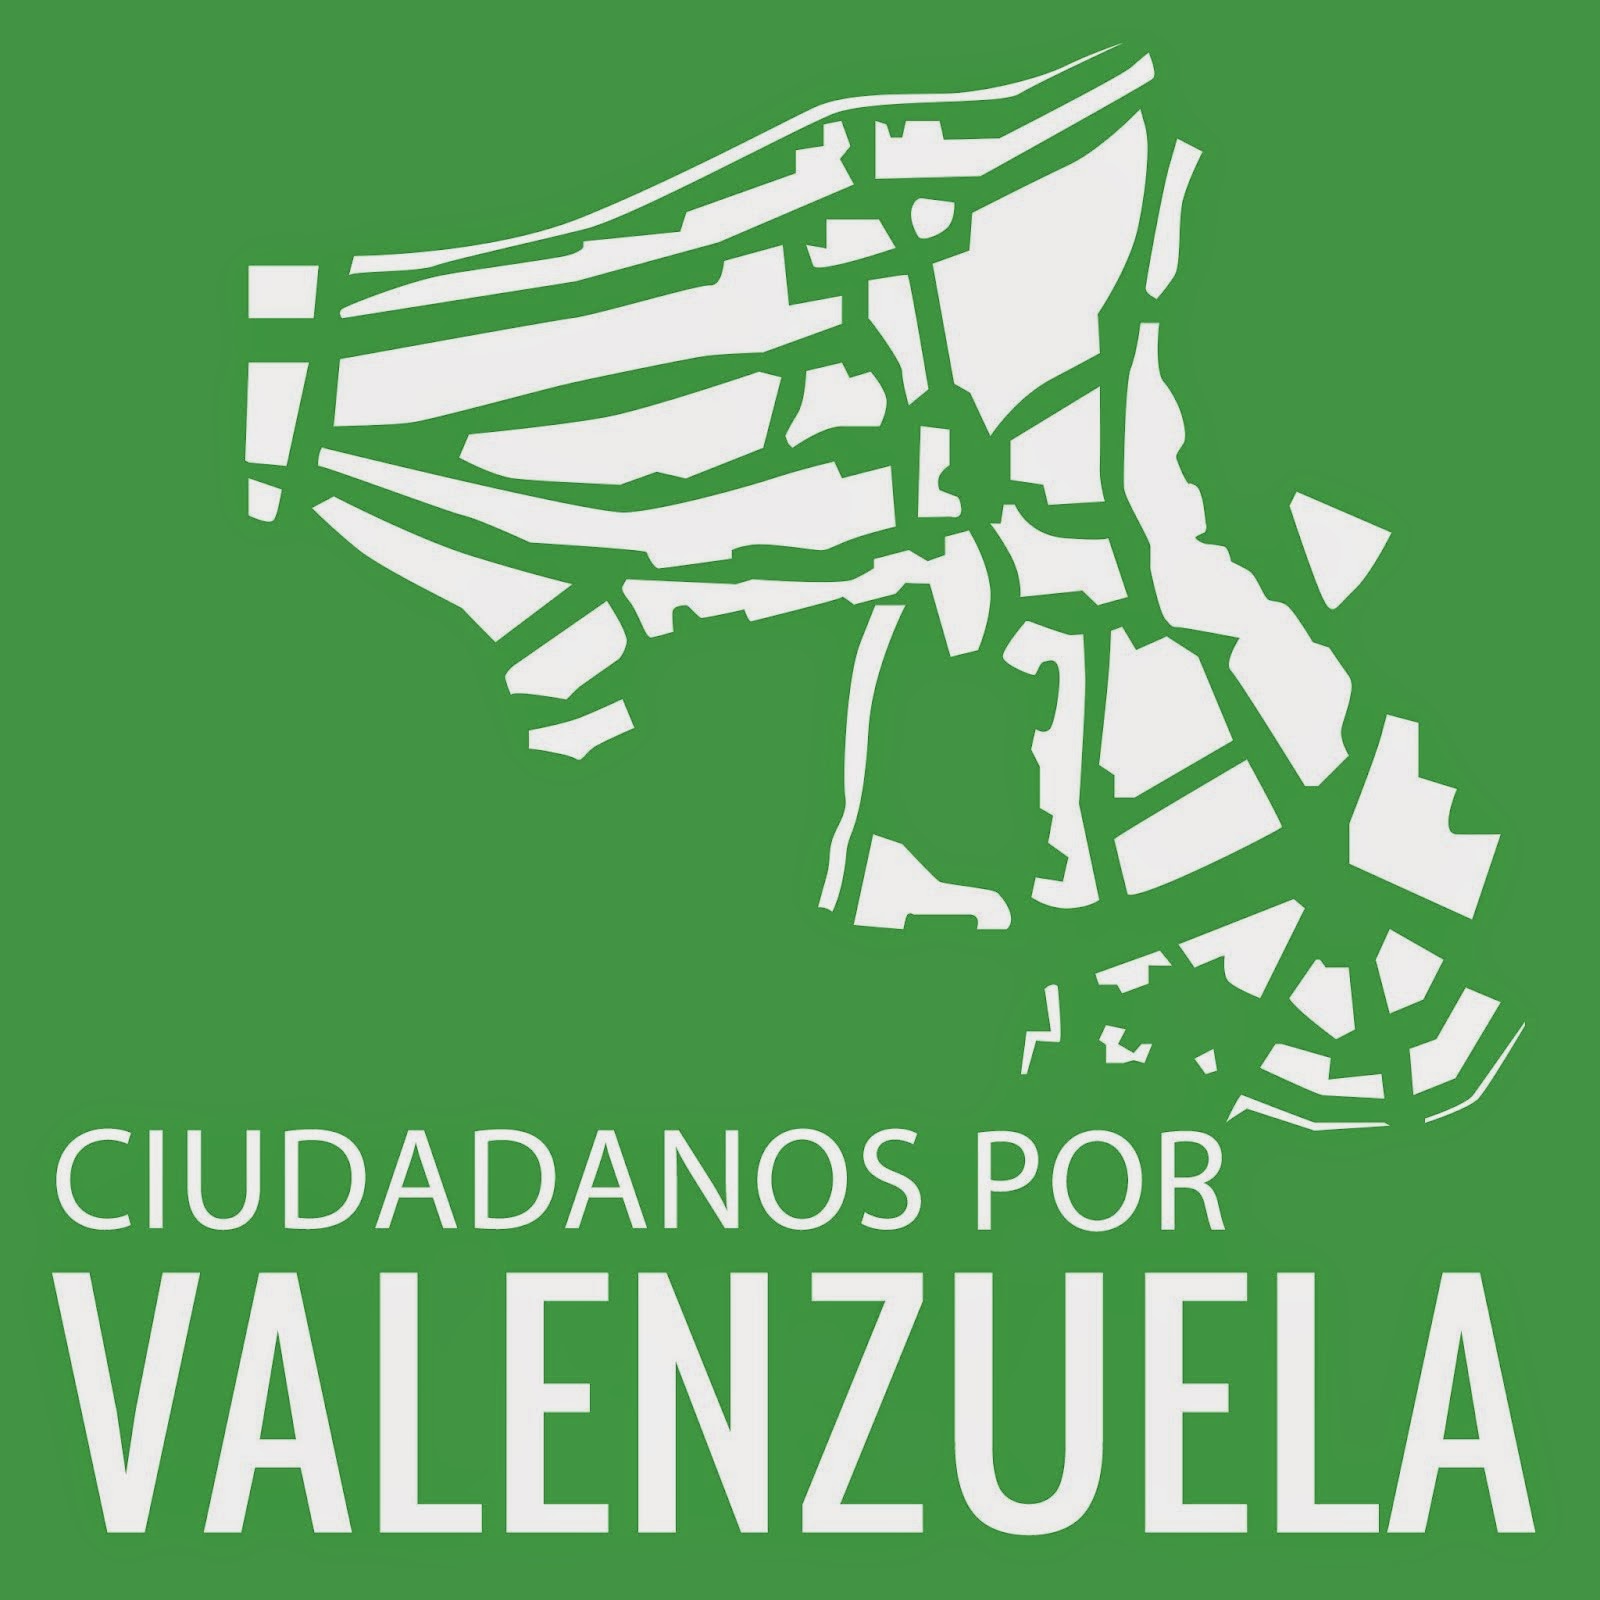 Ciudadanos por Valenzuela